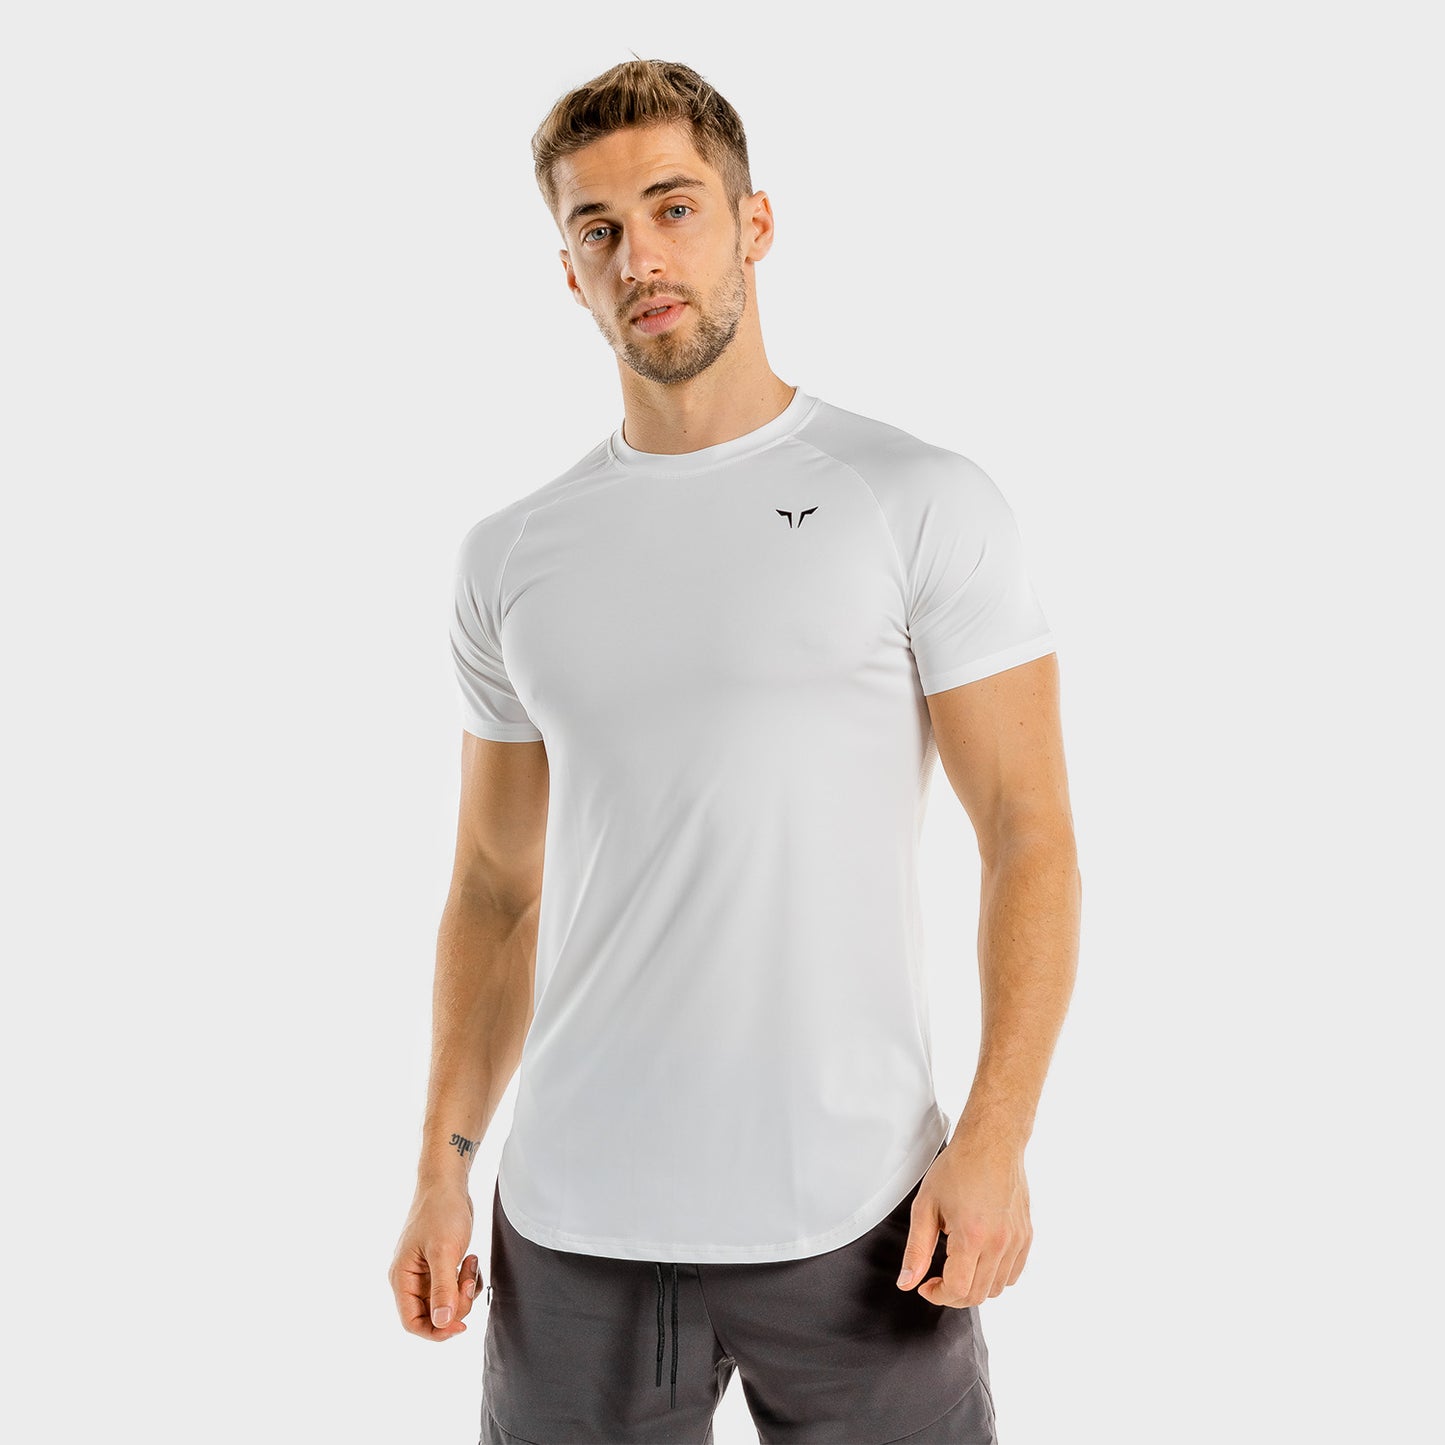 AE | Limitless Razor Tee - White | Gym T-Shirts Men | SQUATWOLF